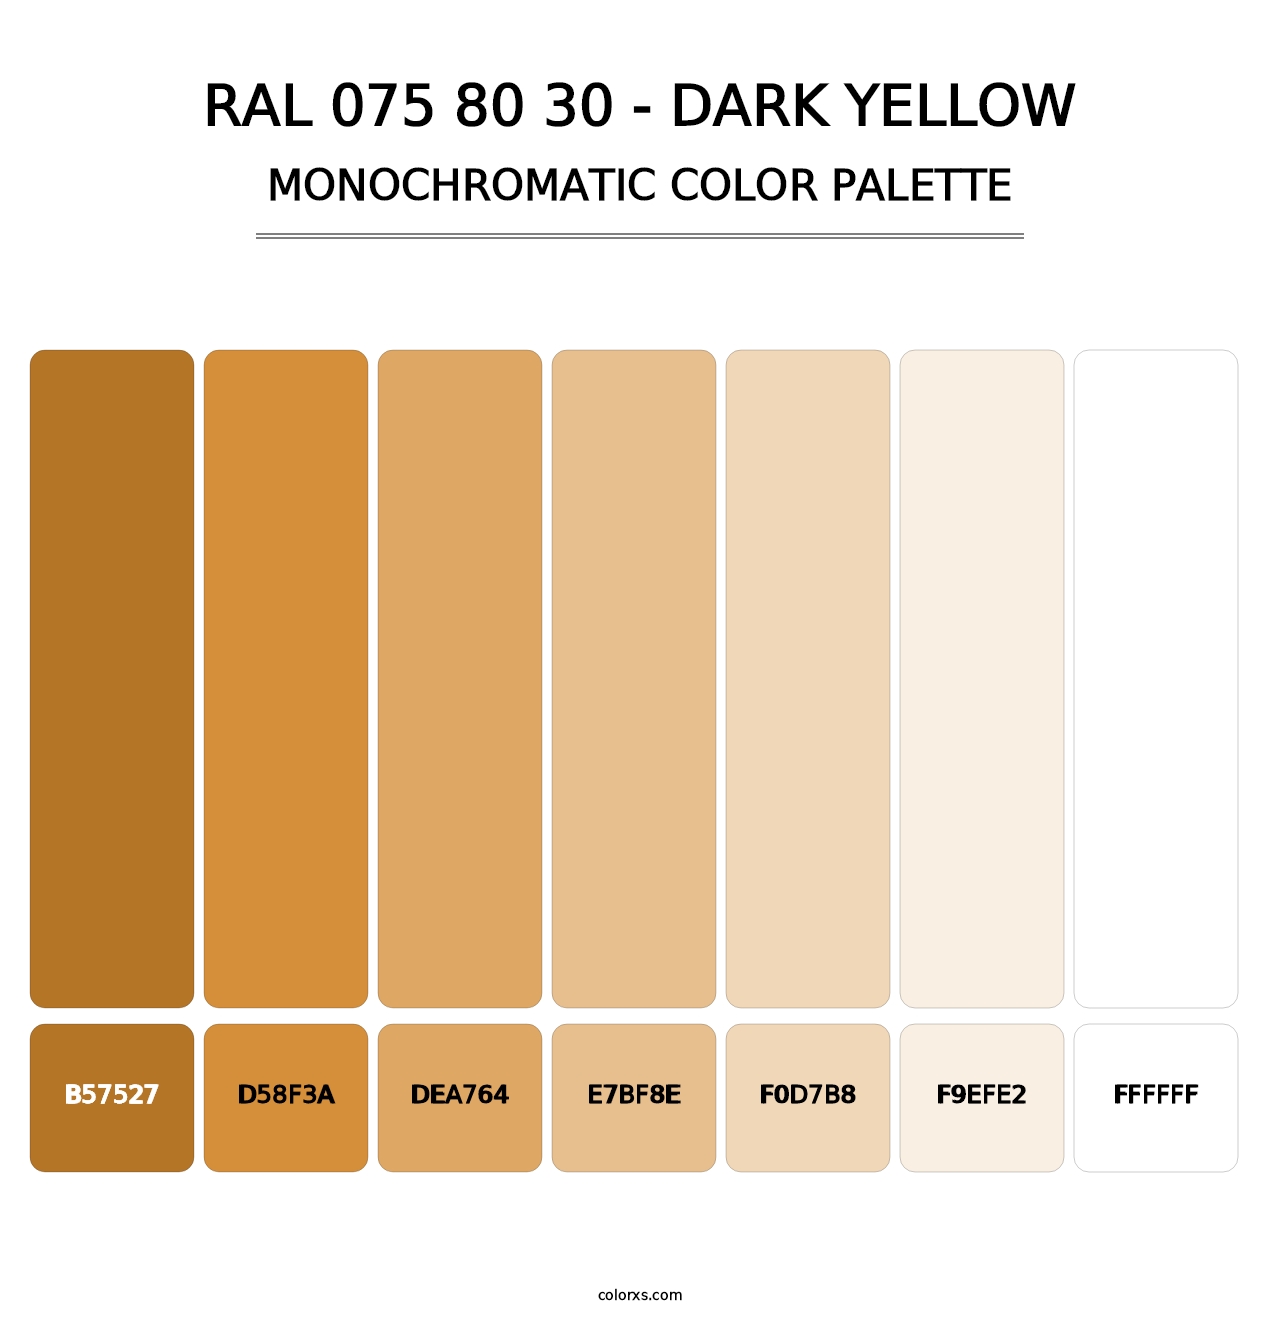 RAL 075 80 30 - Dark Yellow - Monochromatic Color Palette